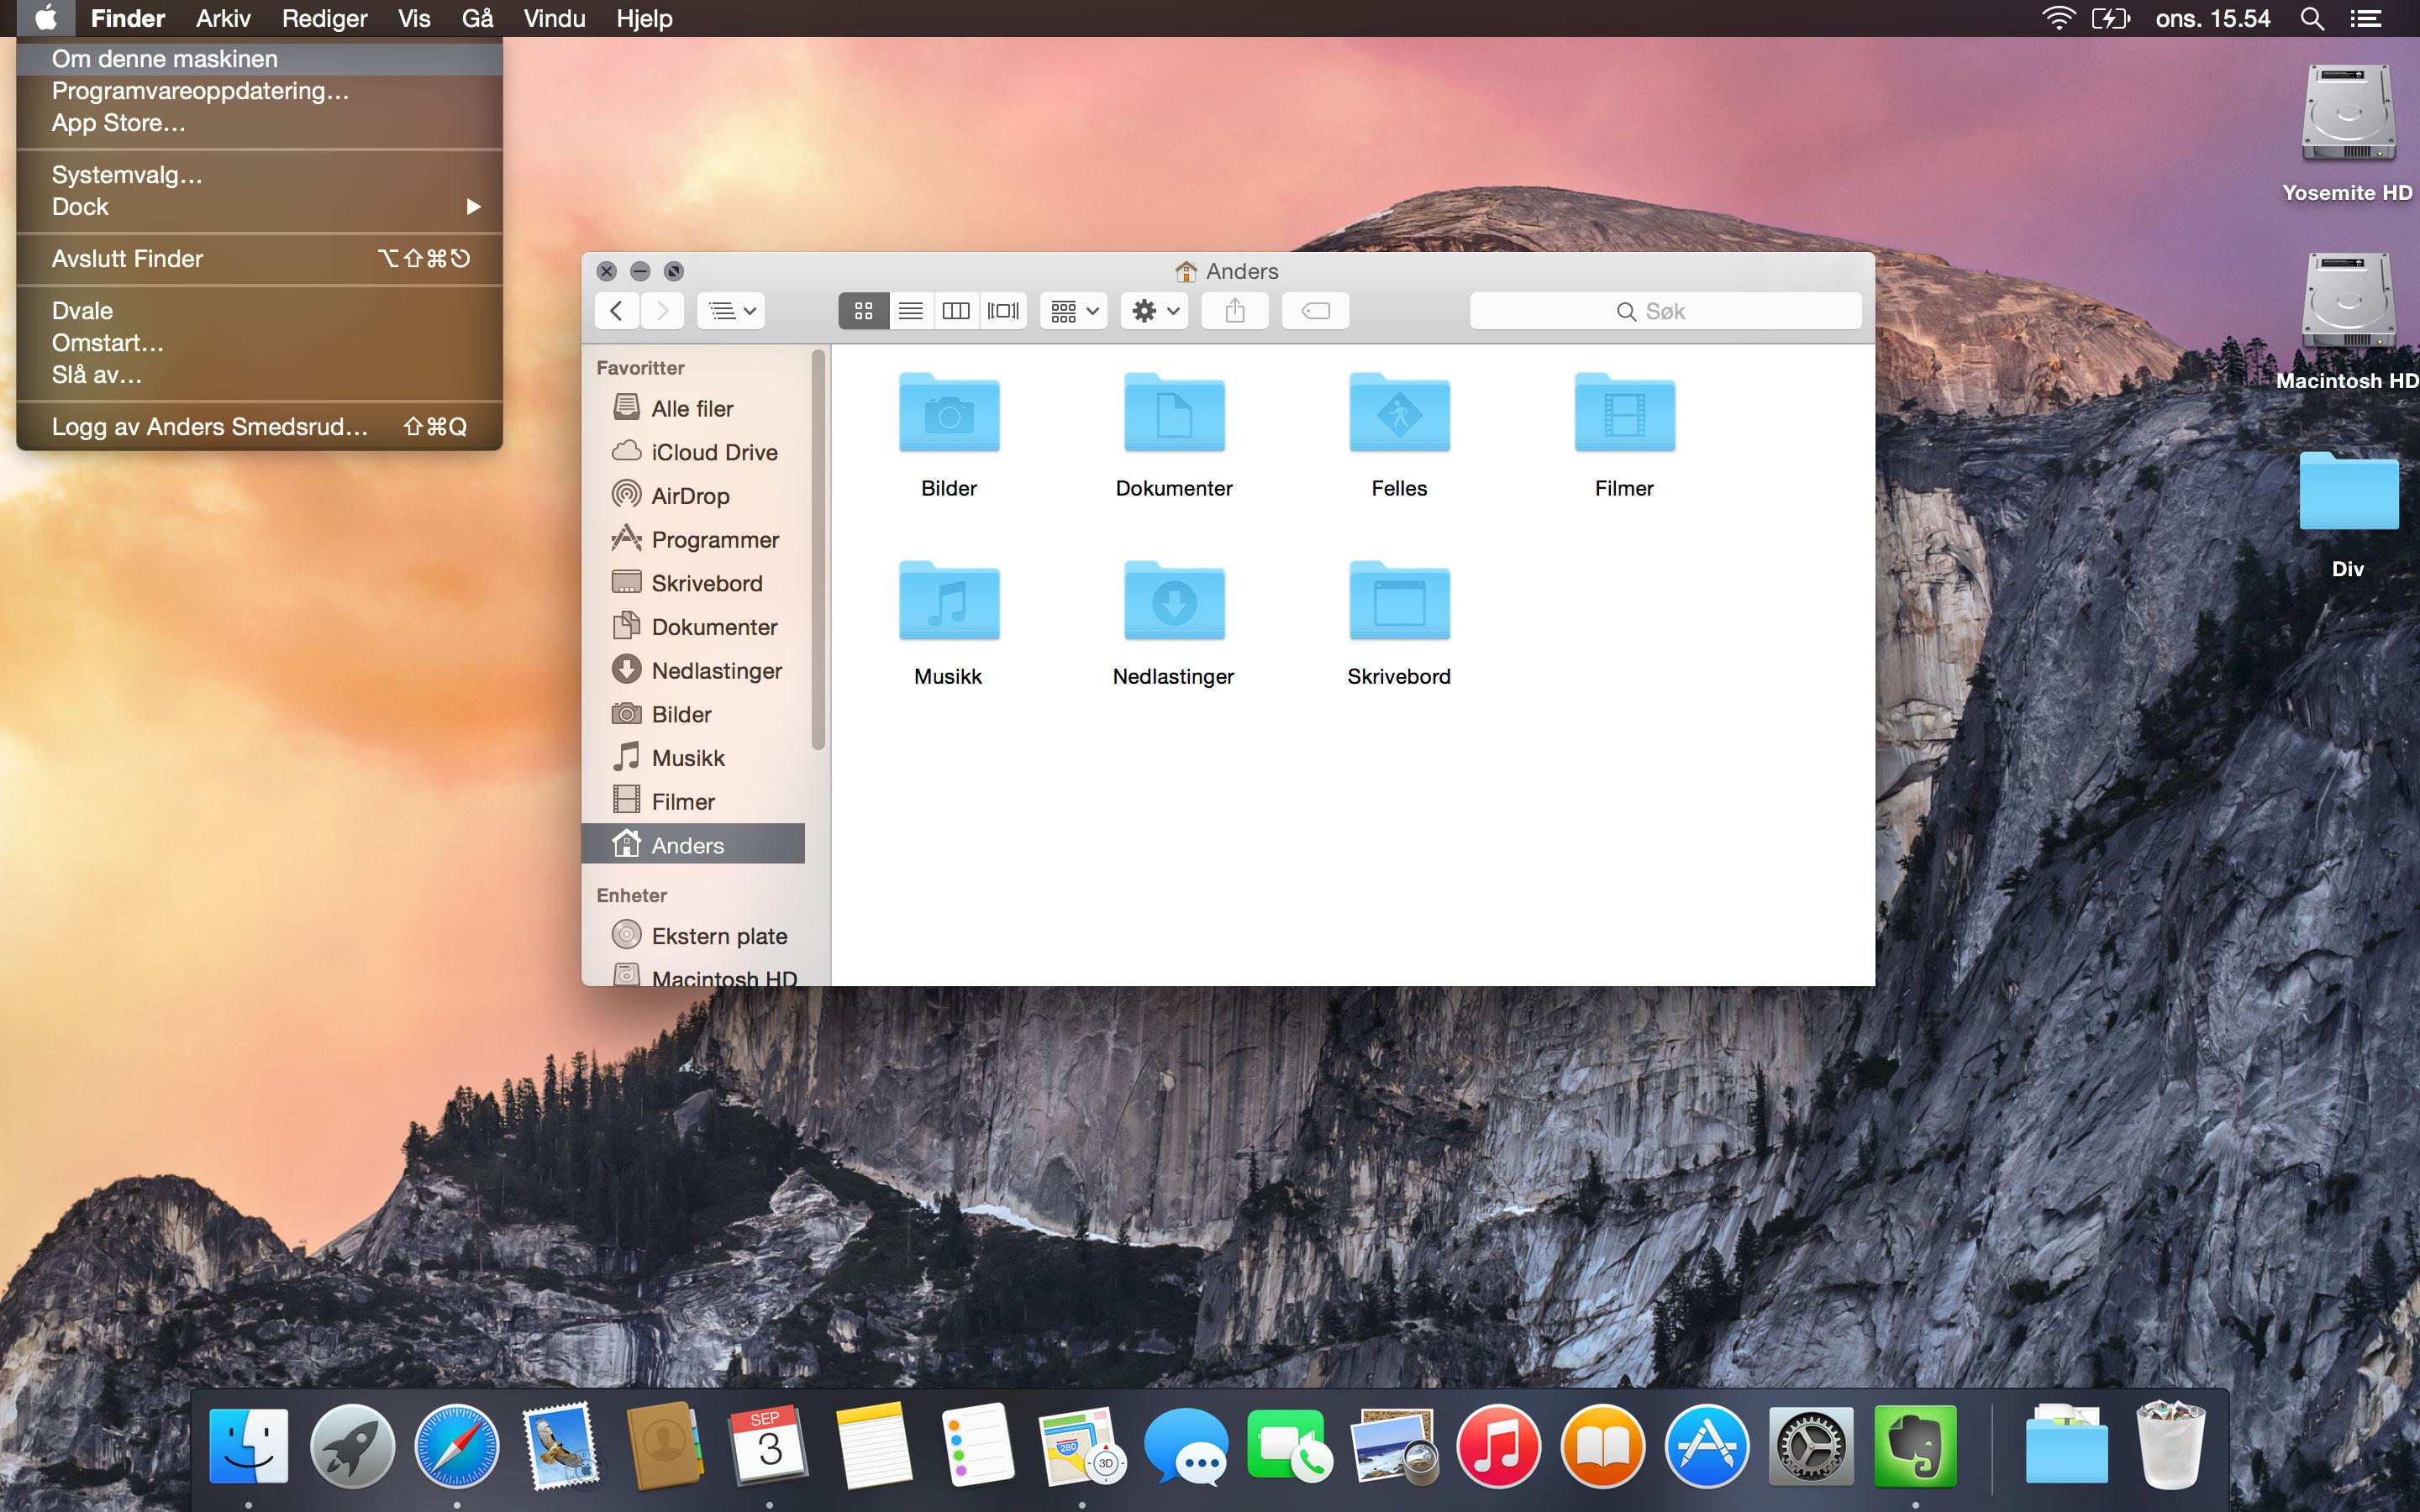 Slik ser OS X 10.10 Yosemite ut i Dark Mode.